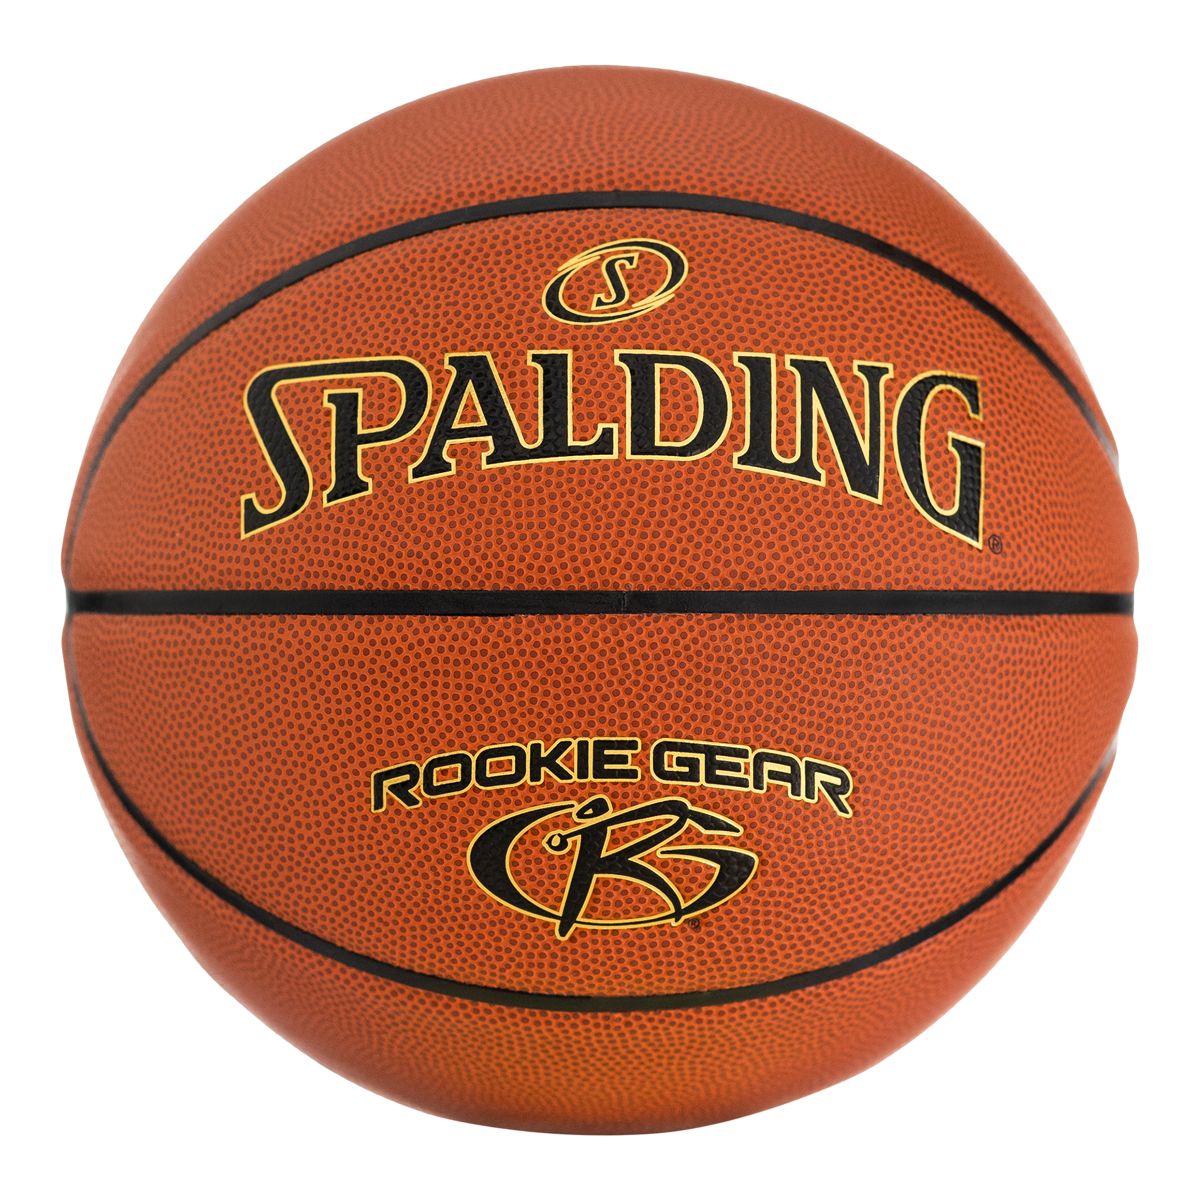 Spalding Rookie Gear Basketball, Size 5, Indoor/Outdoor | SportChek